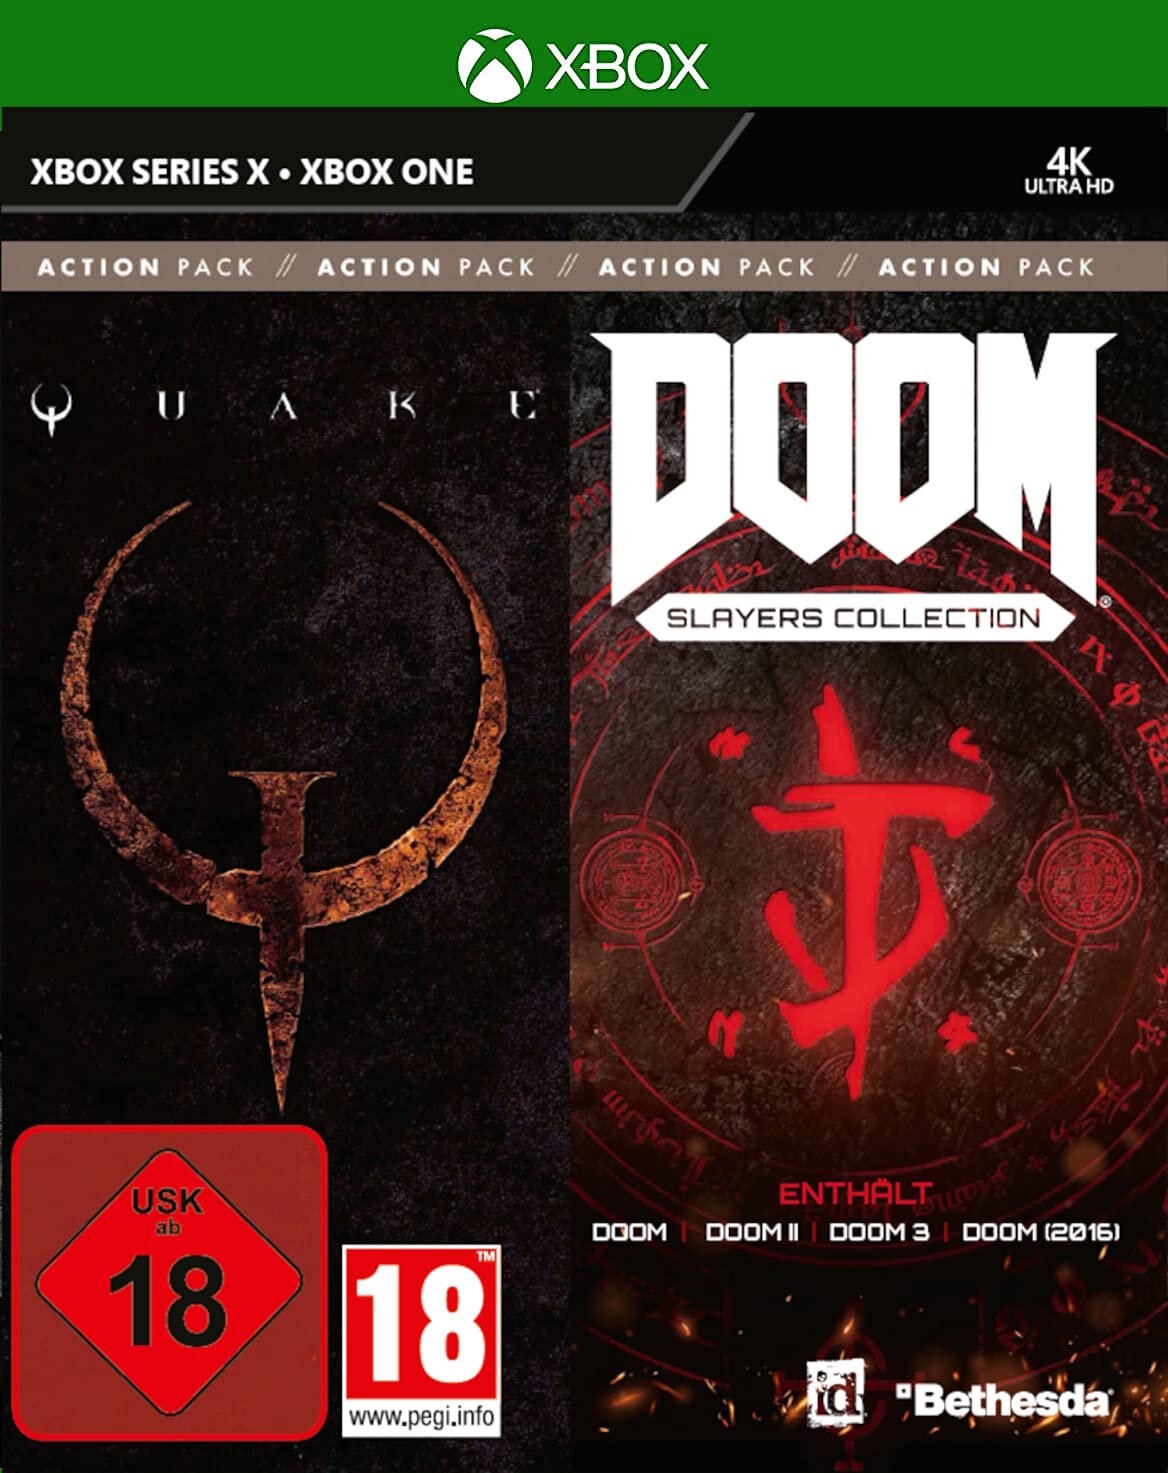 Quake + DOOM Slayers Collection (Doom + Doom 2 + Doom 3 + Doom 2016) (Xbox One/Series X) английский язык